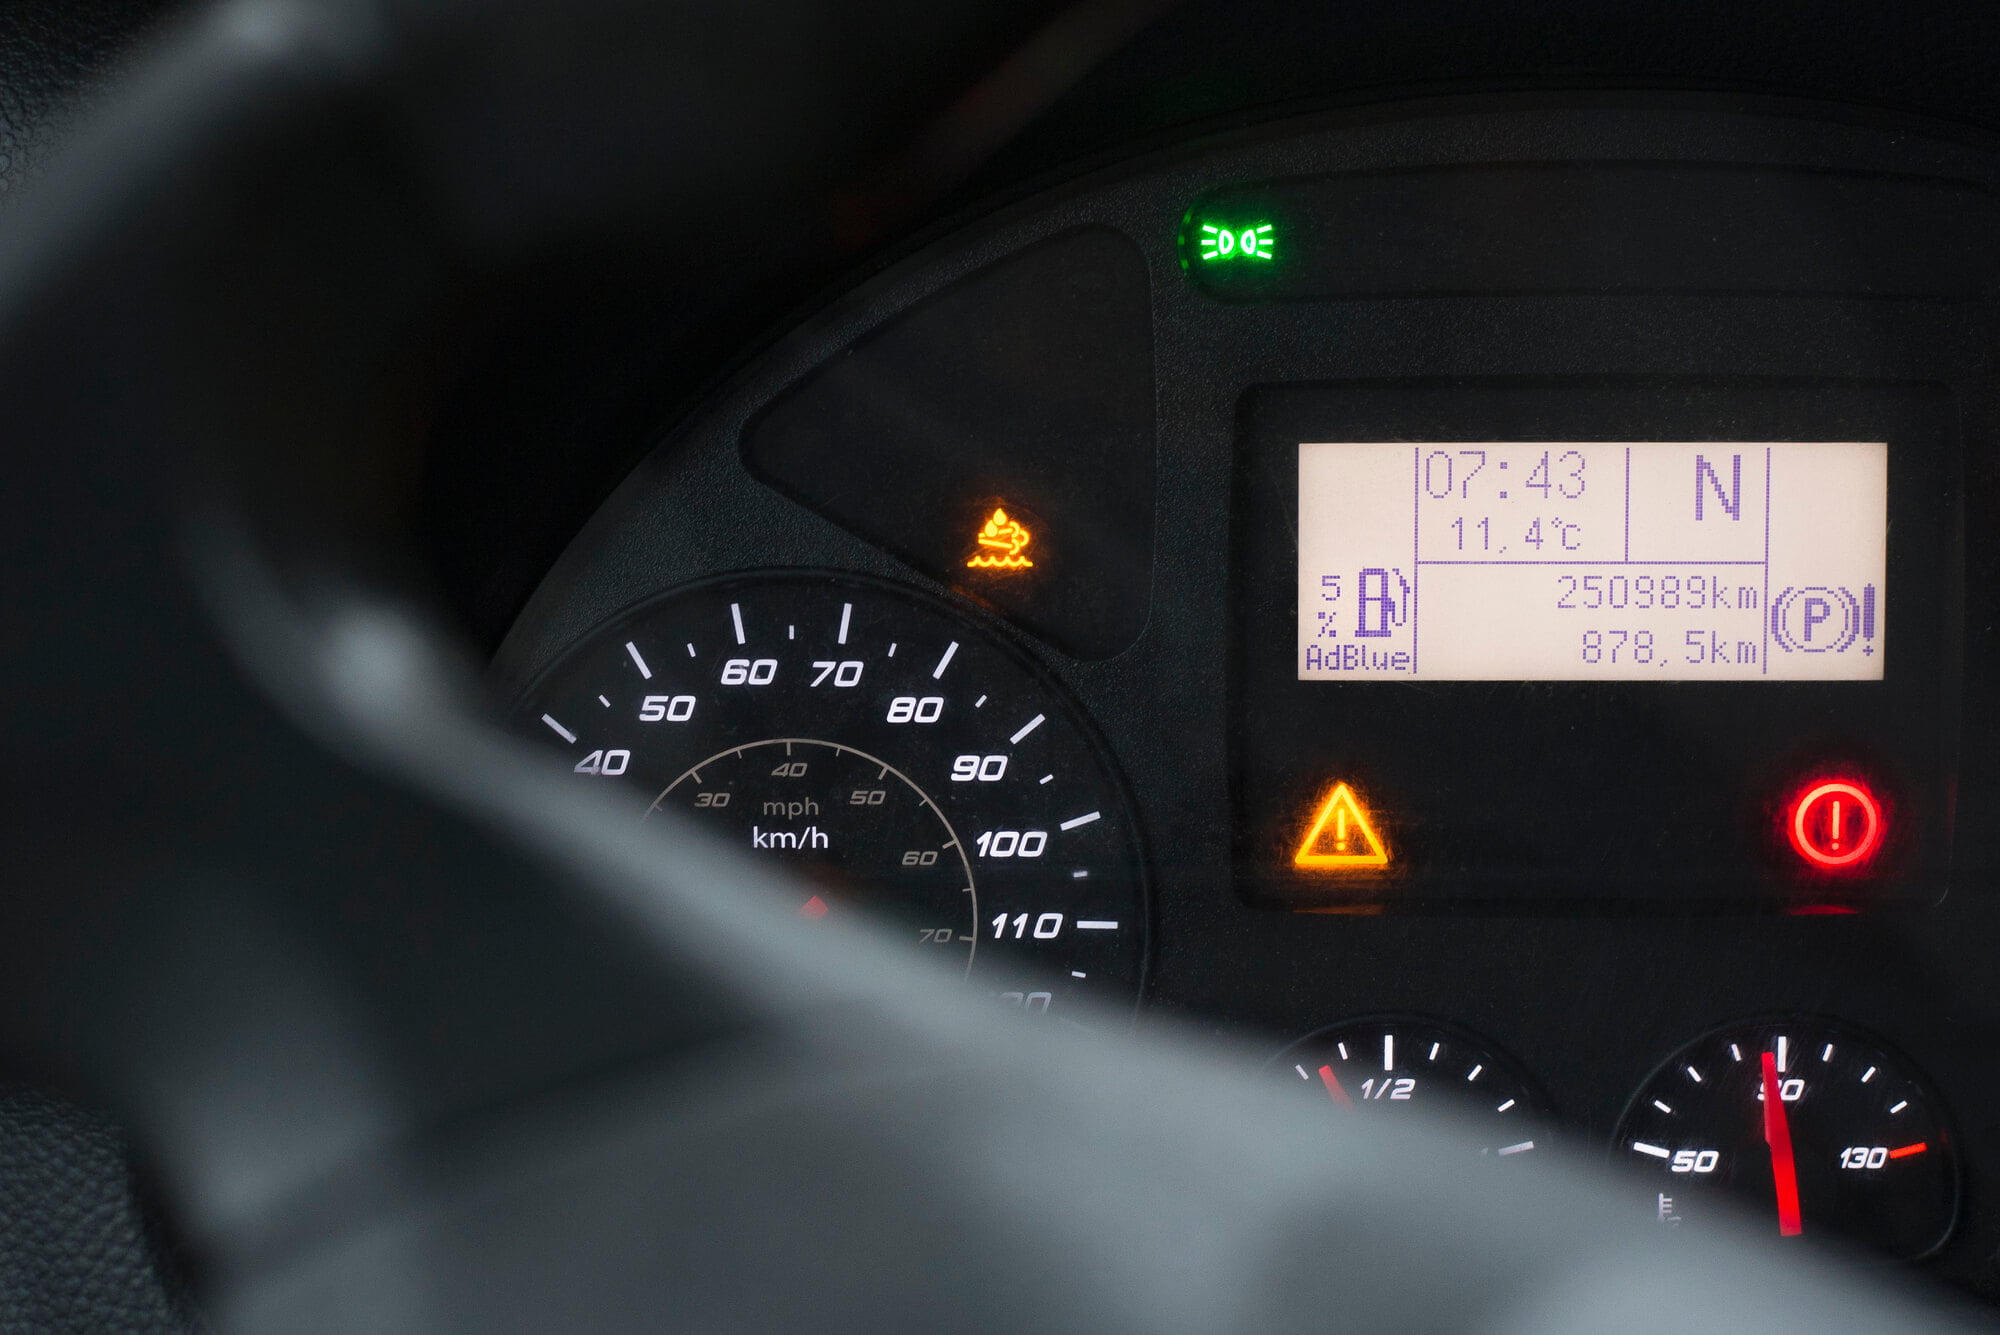 AdBlue warning light on car dashboard